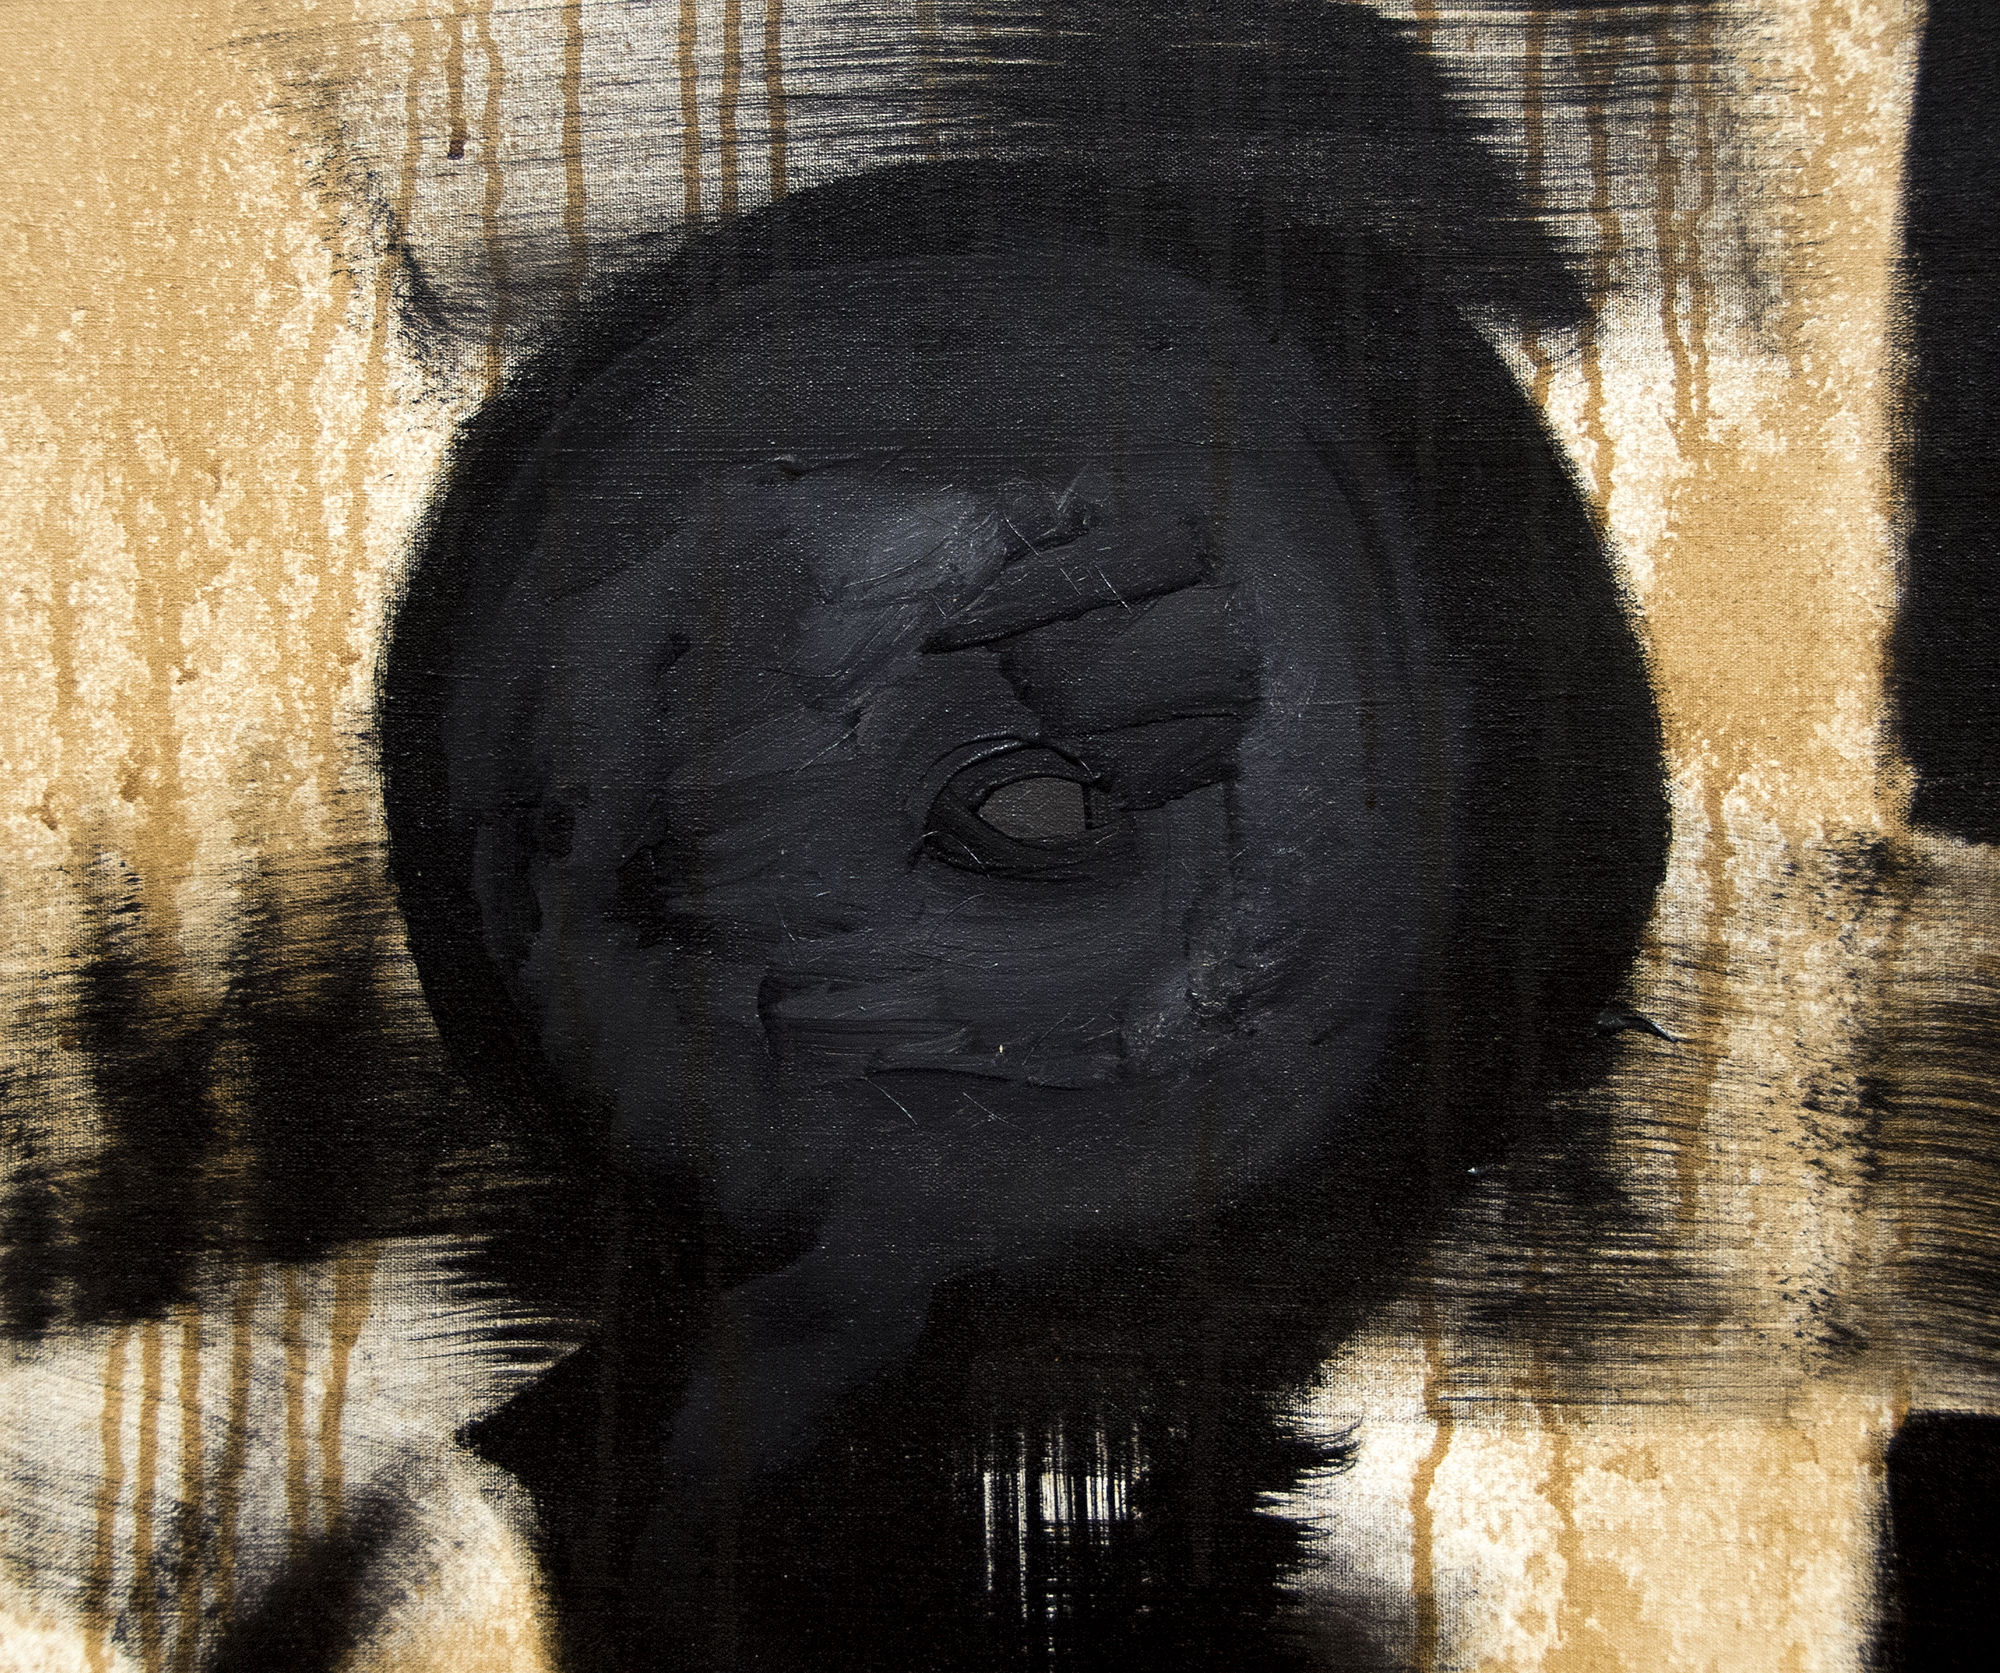 HERB ALPERT - Black Horizon - acrylic and coffee on canvas - 48 x 72 in.